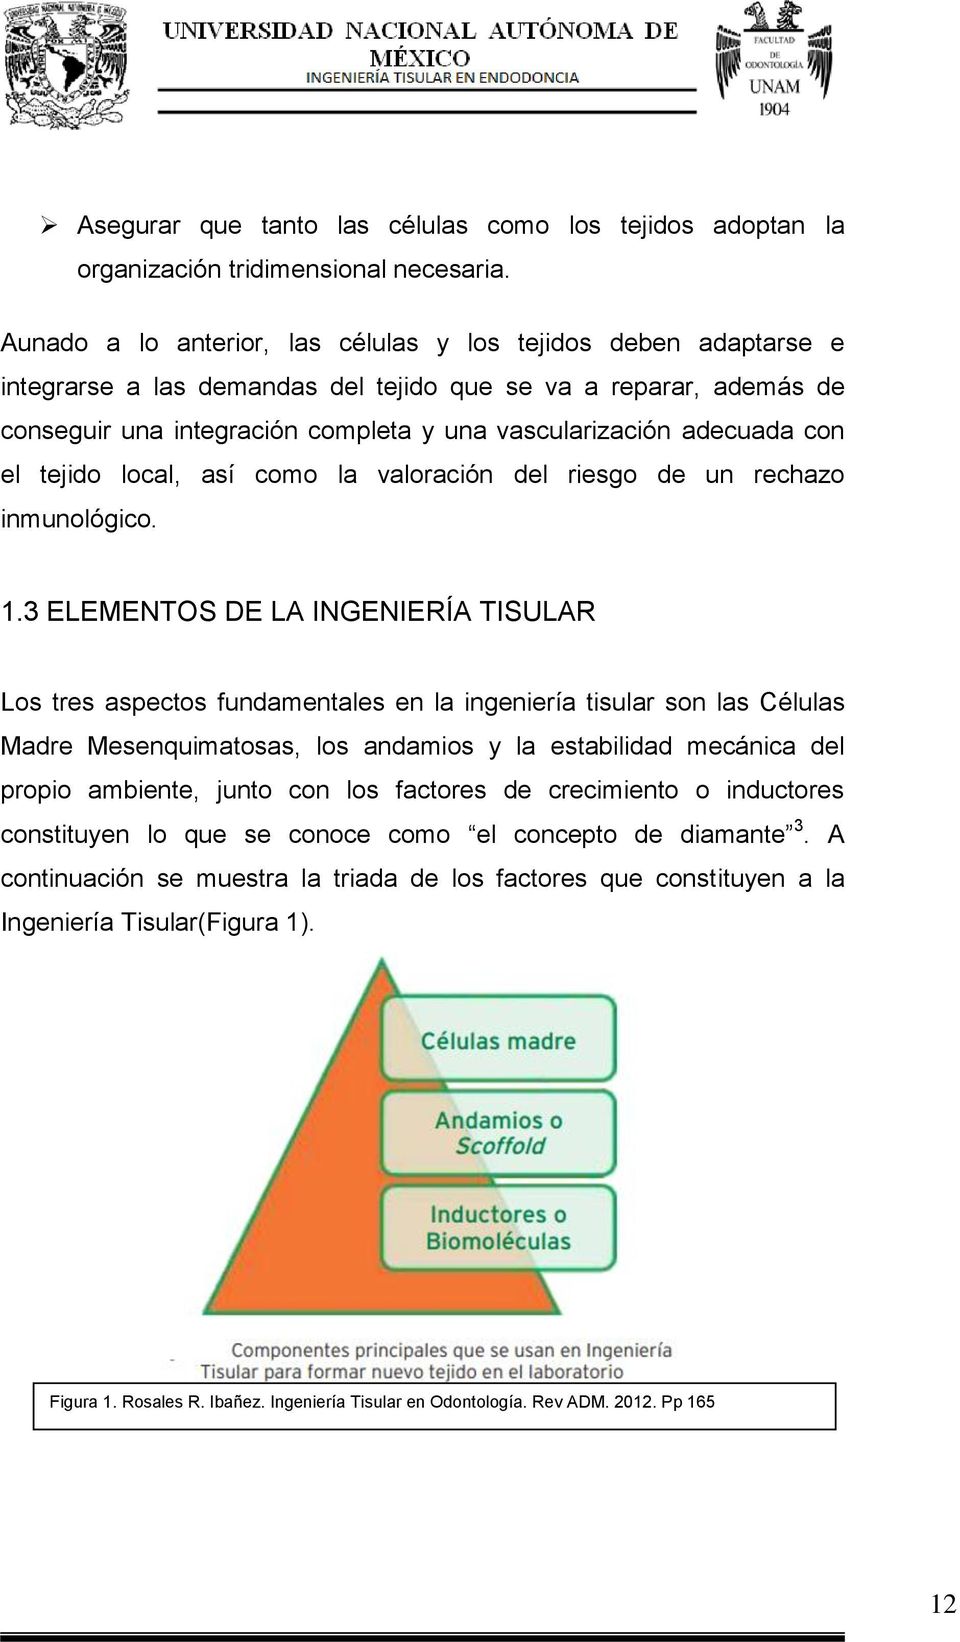 Universidad Nacional Autonoma De Mexico Ingenieria Tisular En